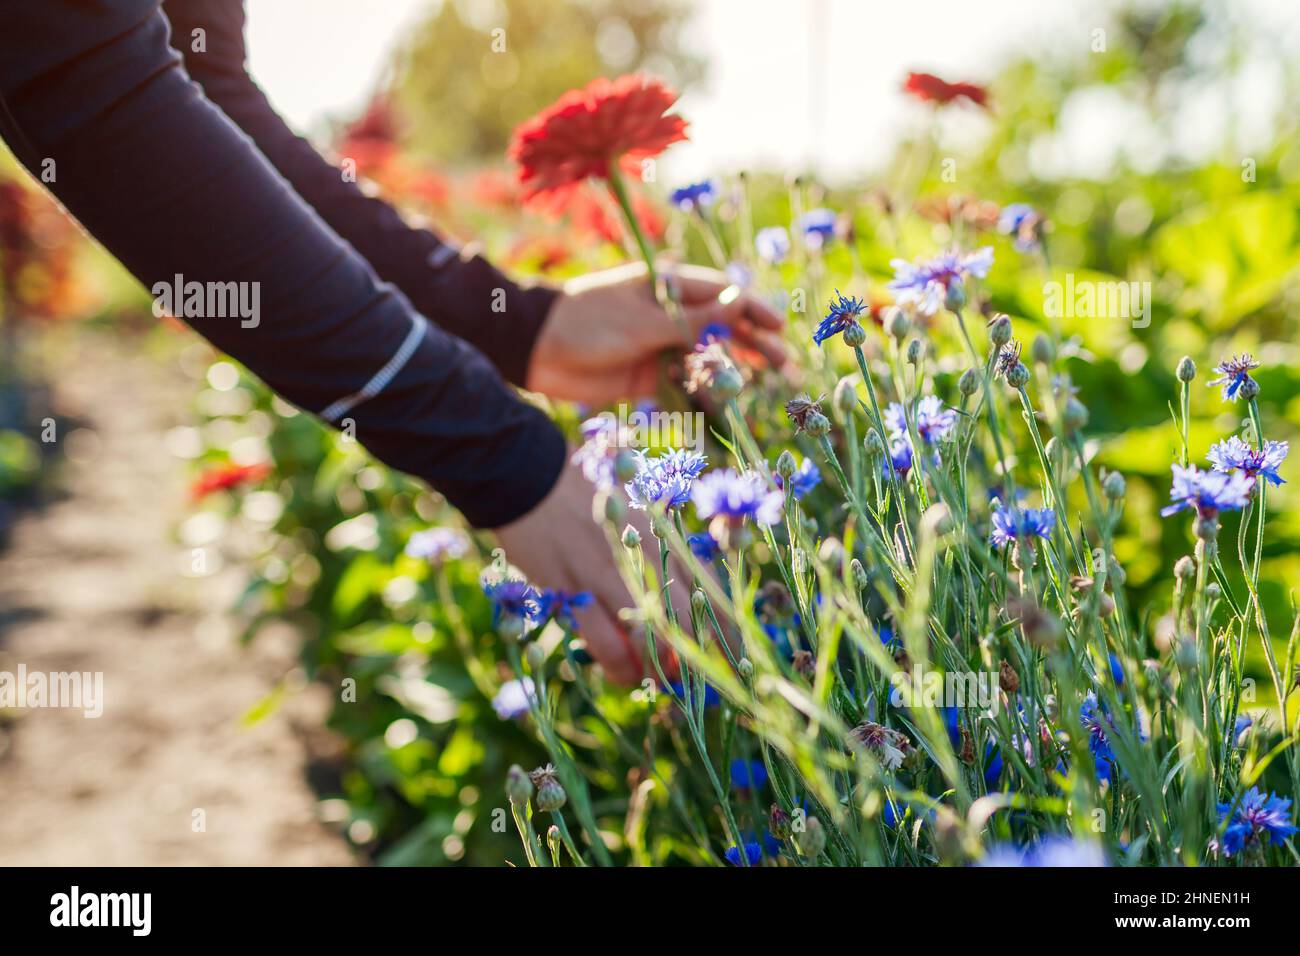 Woman gardener picking red zinnias and blue bachelor buttons in summer garden using pruner. Cut flowers harvest Stock Photo